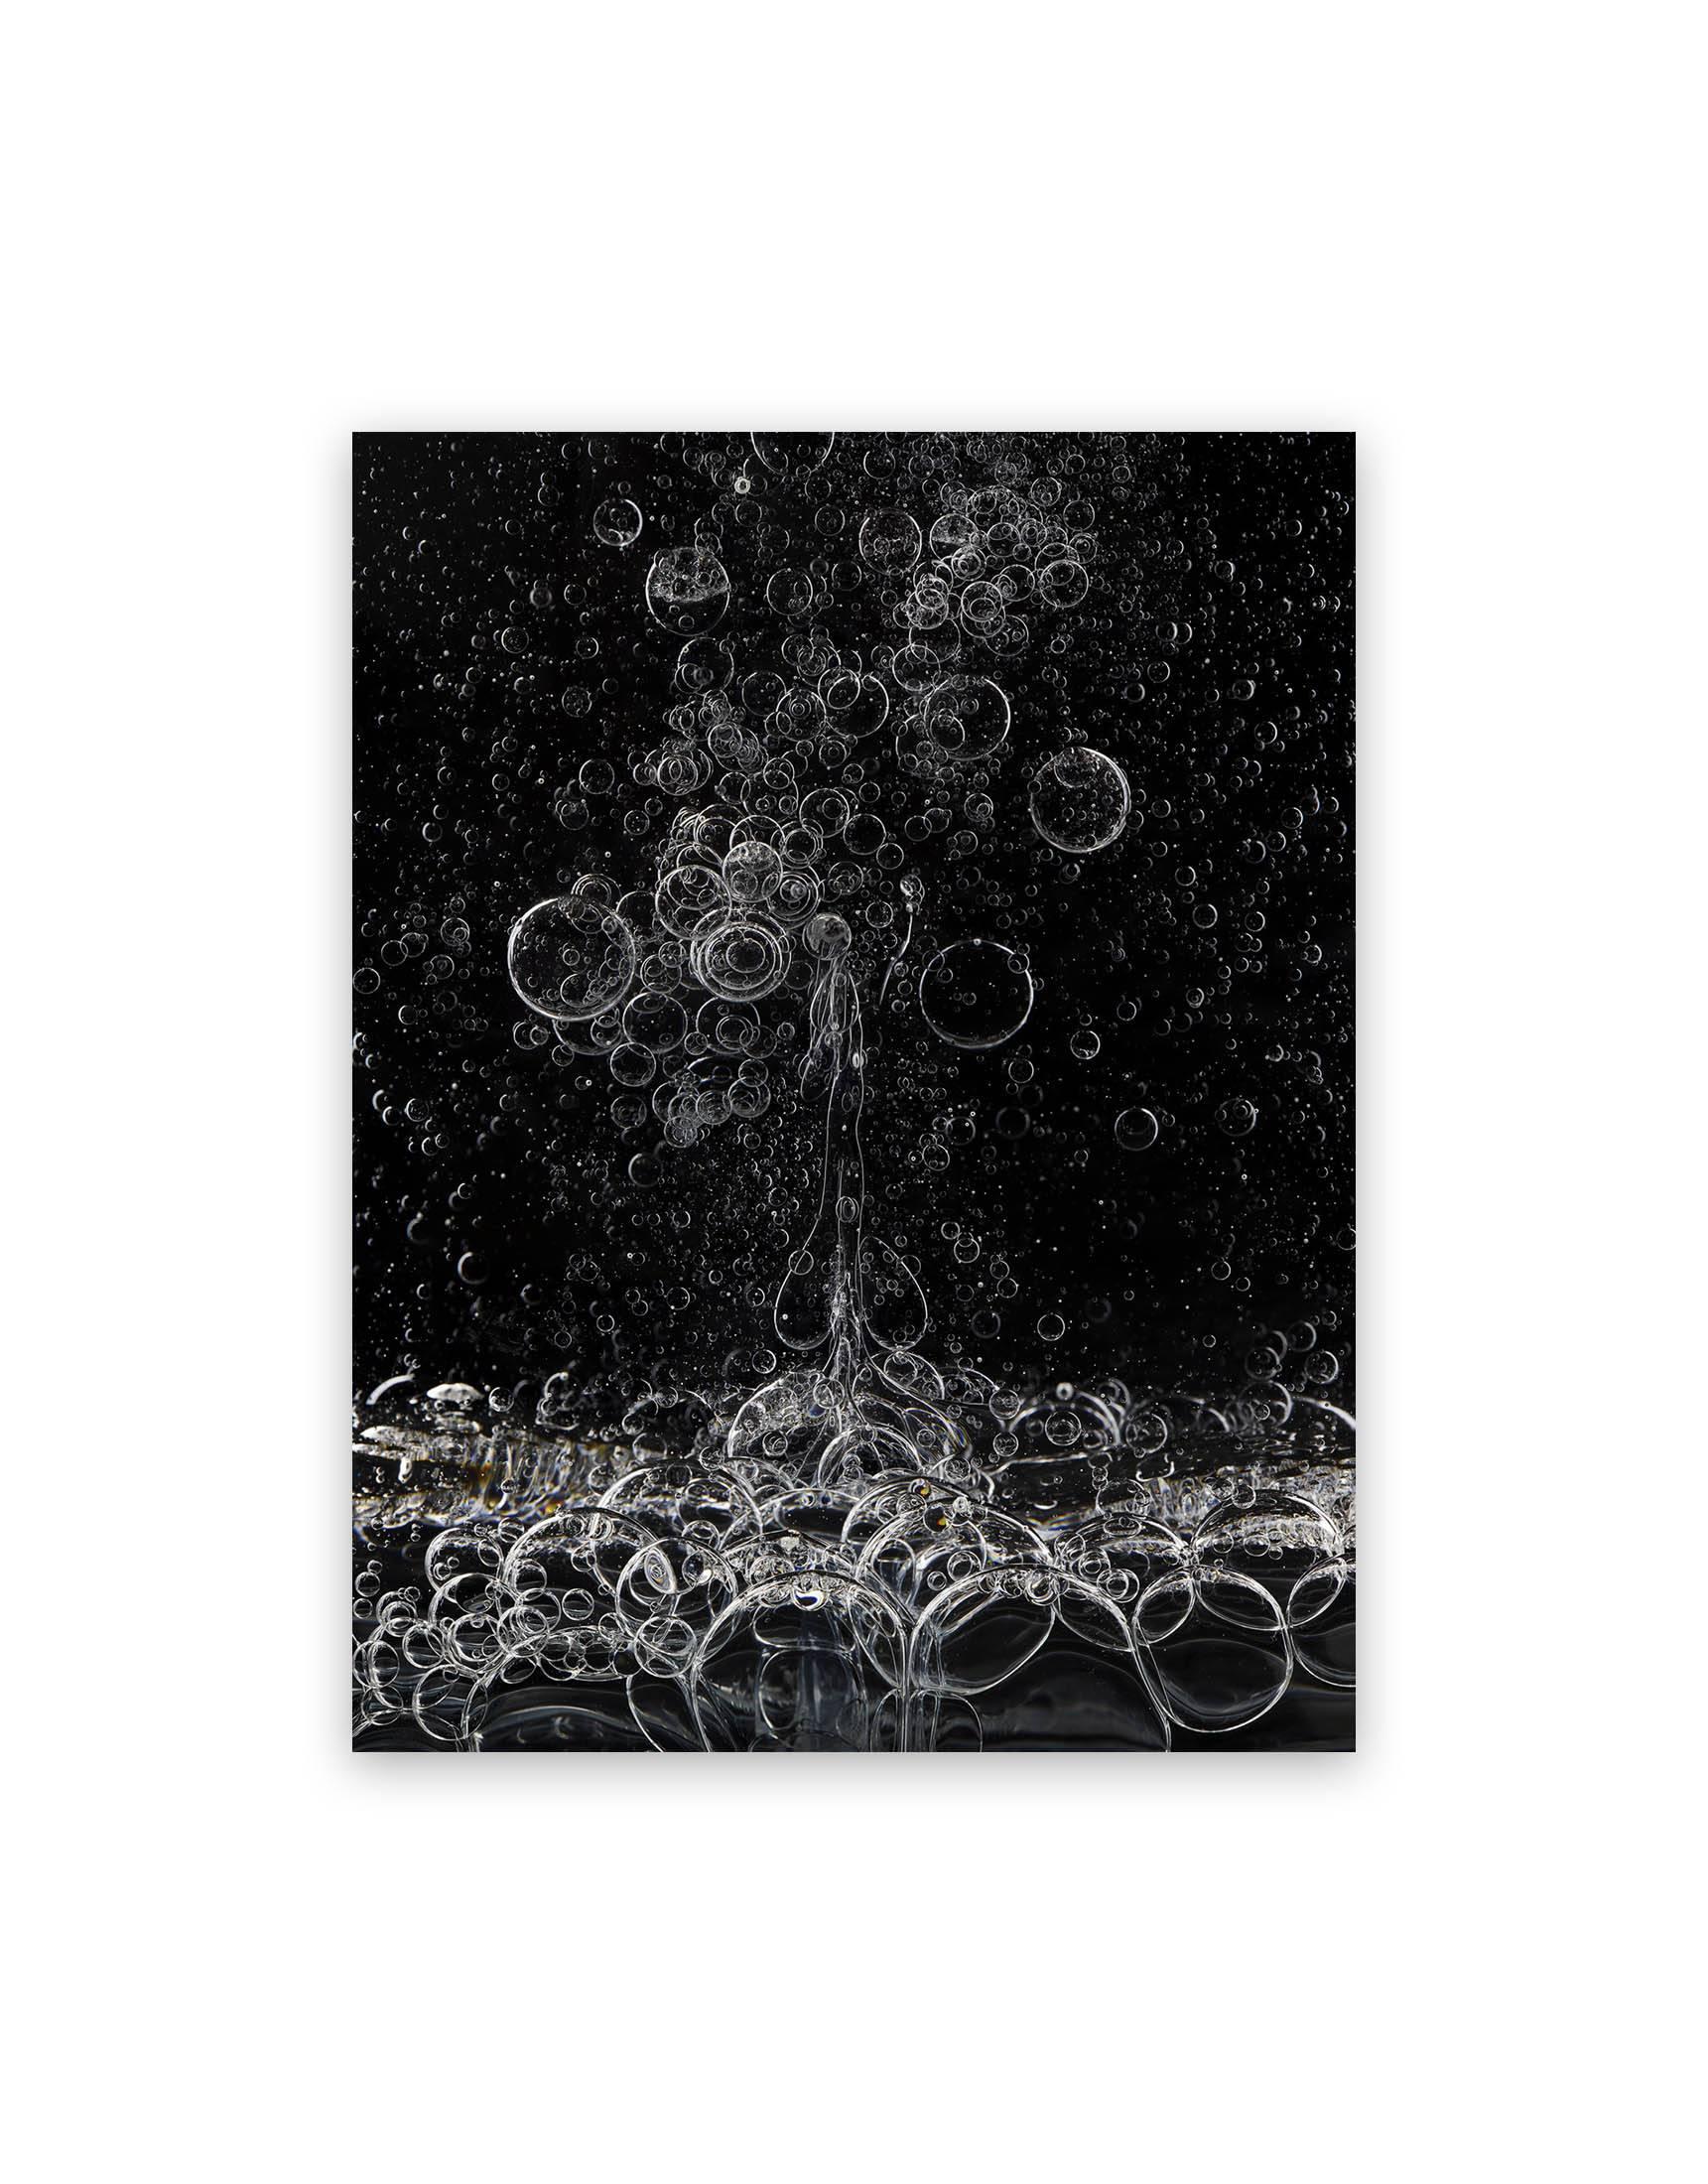 Seb Janiak Black and White Photograph - Gravity - Liquid 21 (Medium)